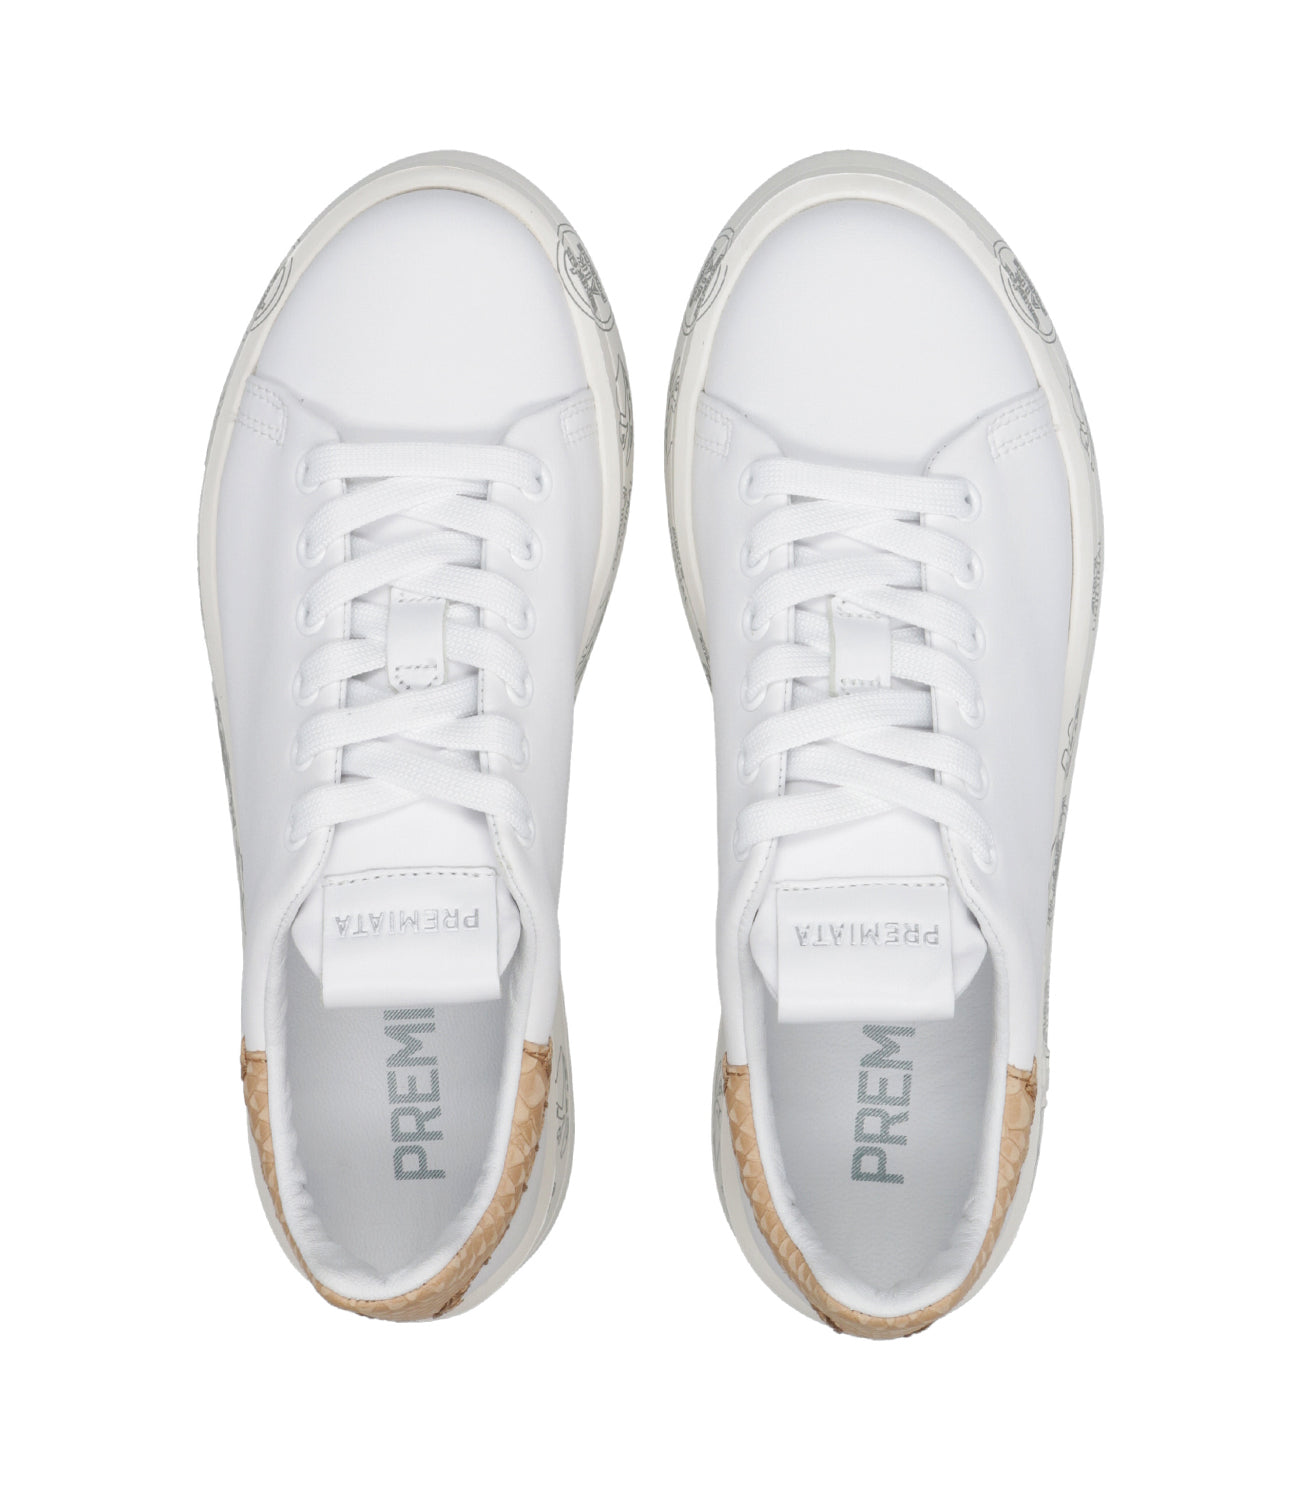 Premiata | Belle 5716 White and Beige Sneakers